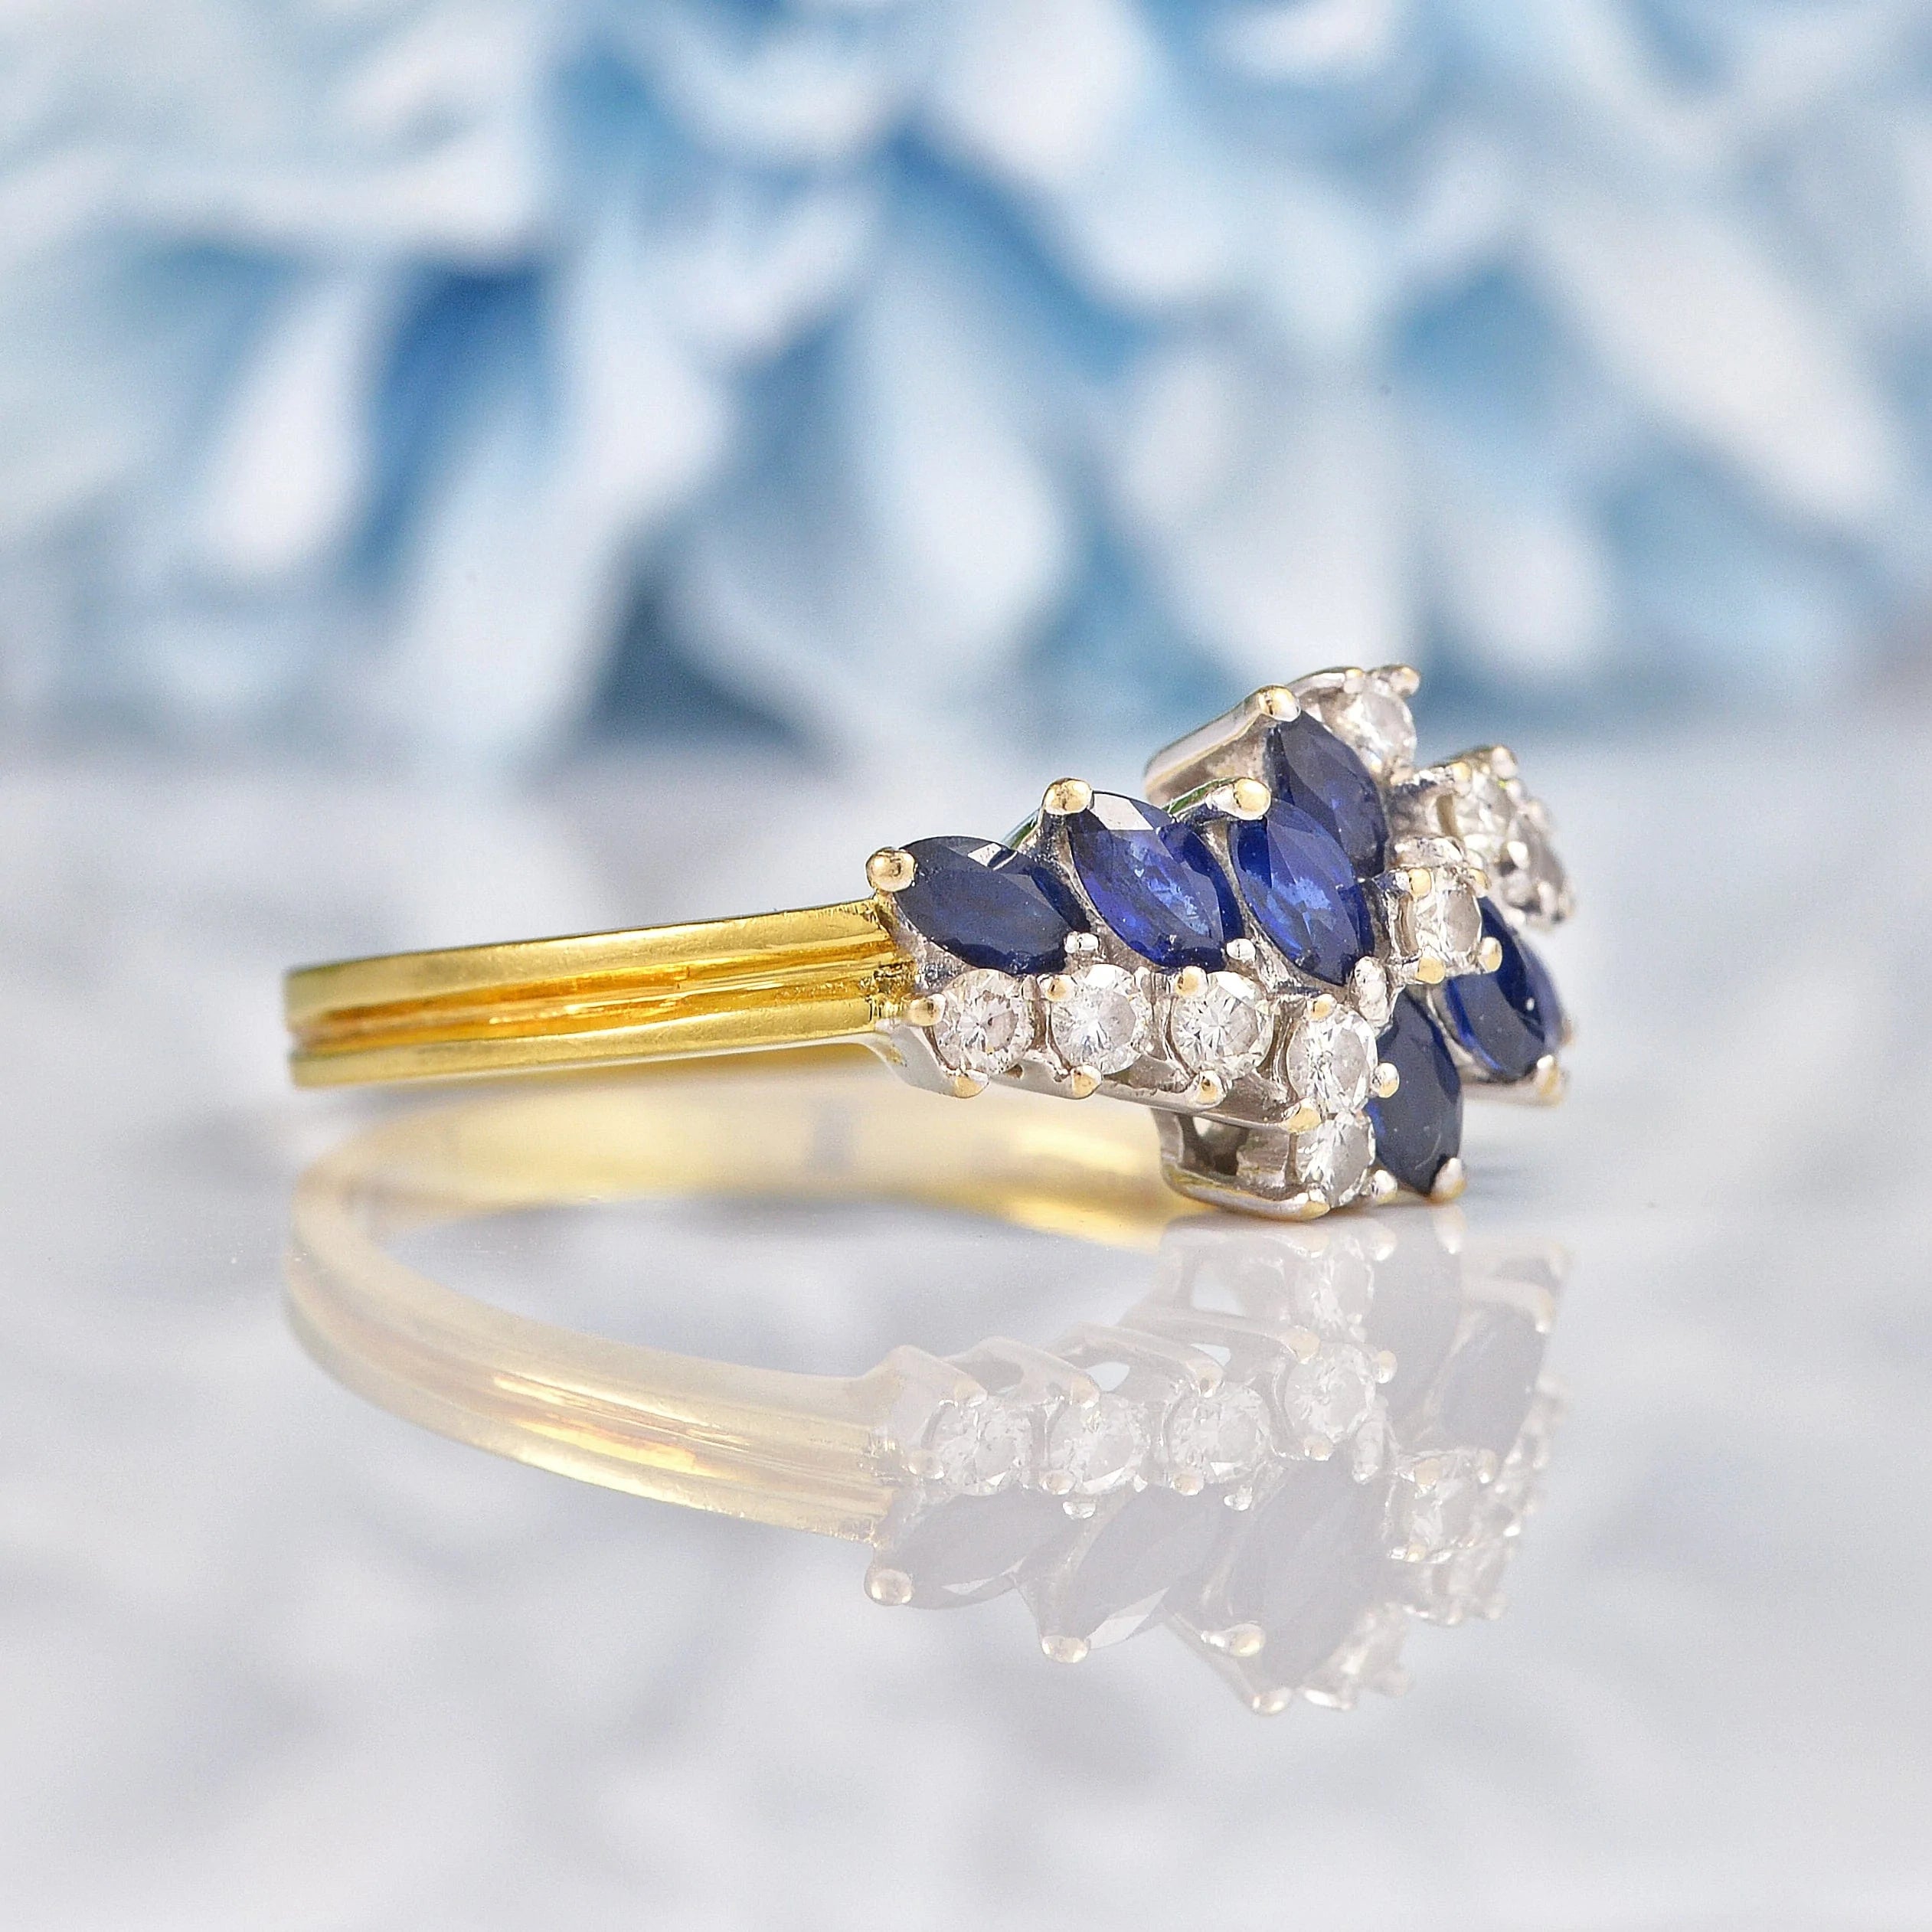 Ellibelle Jewellery Vintage 1989 Blue Sapphire & Diamond Marquise Cluster Ring